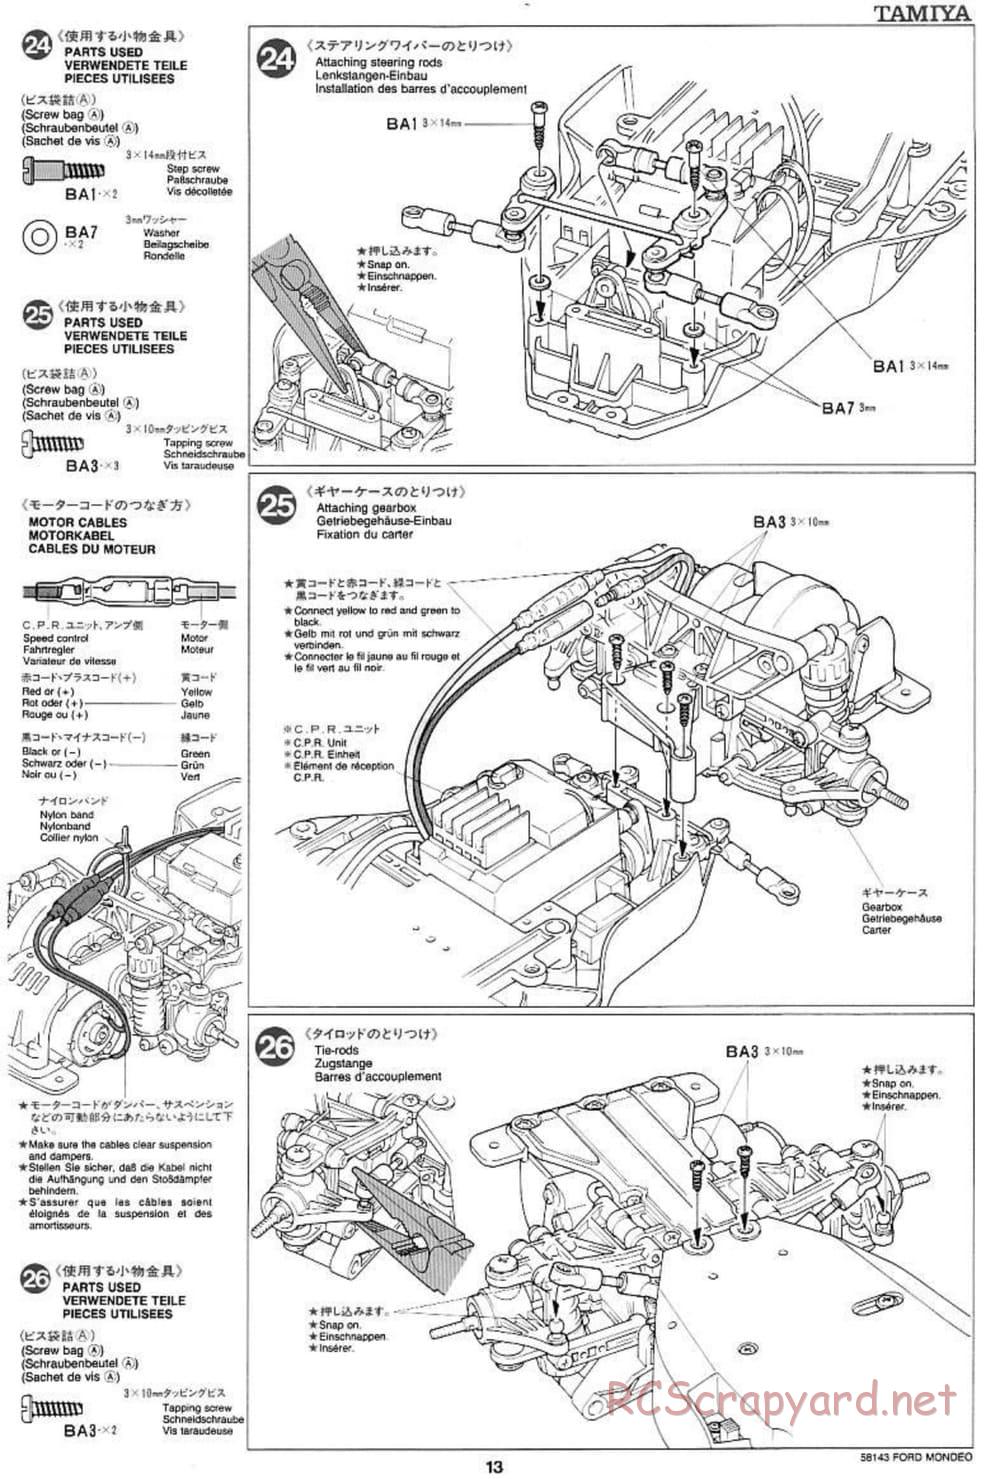 Tamiya - Ford Mondeo BTCC - FF-01 Chassis - Manual - Page 13